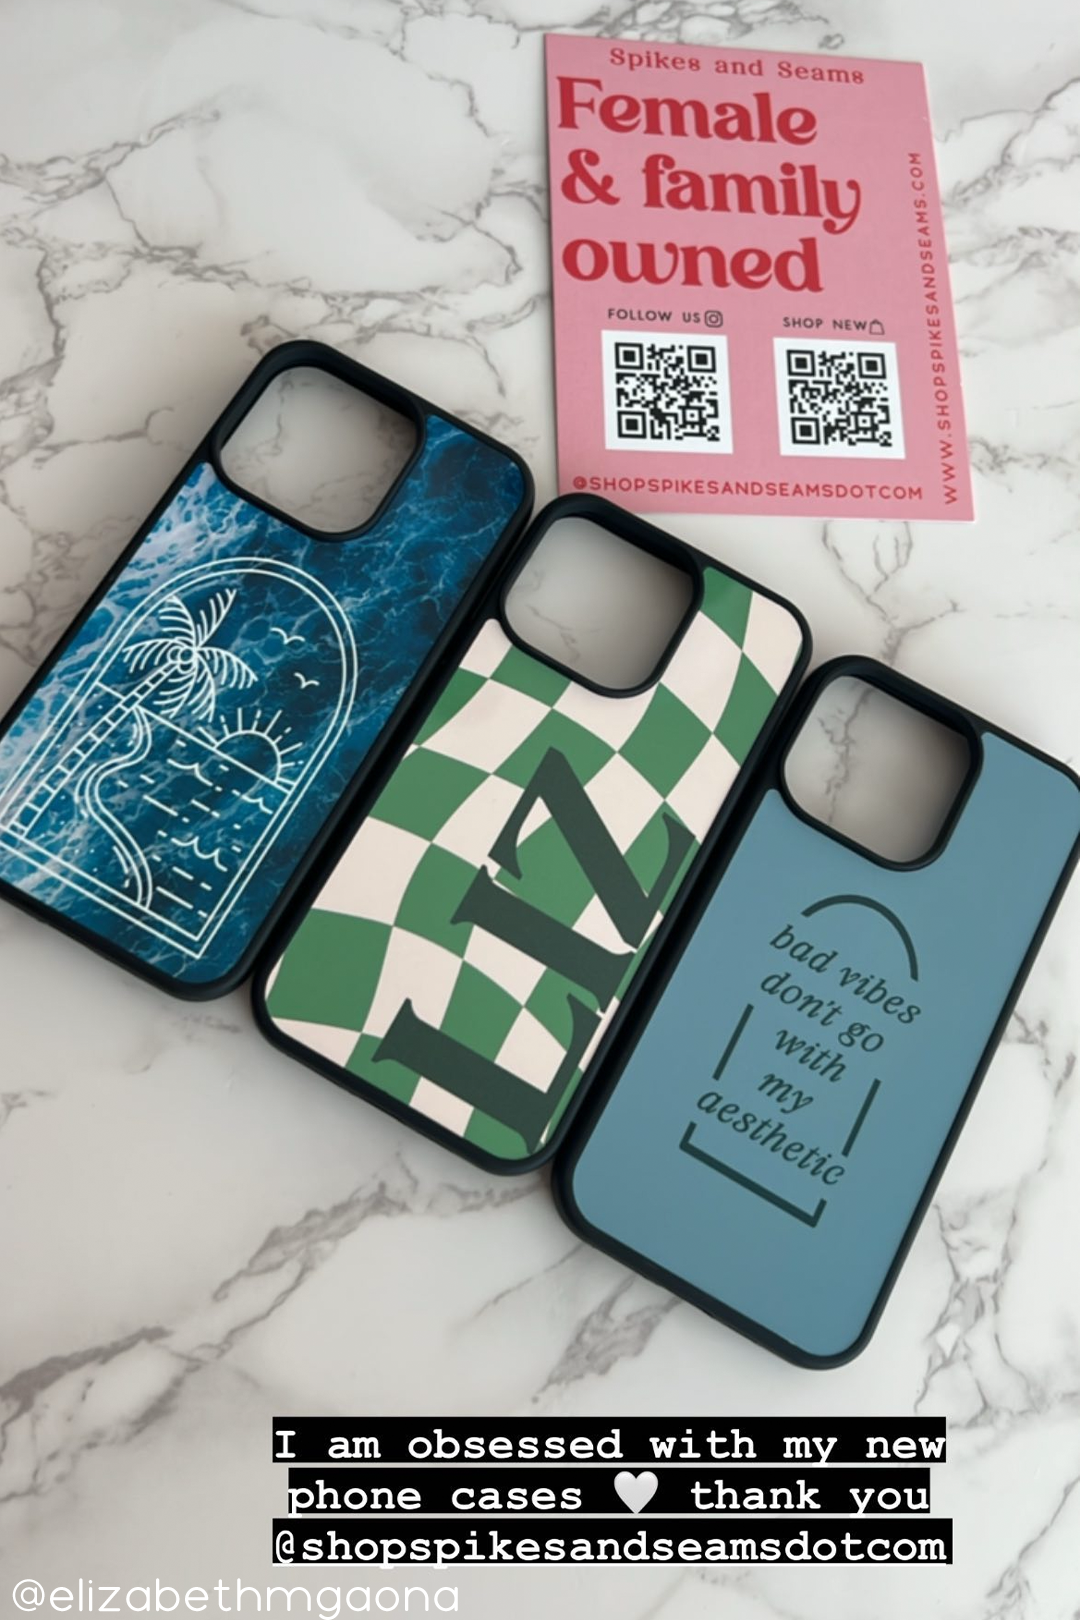 Custom Green Checkered iPhone case